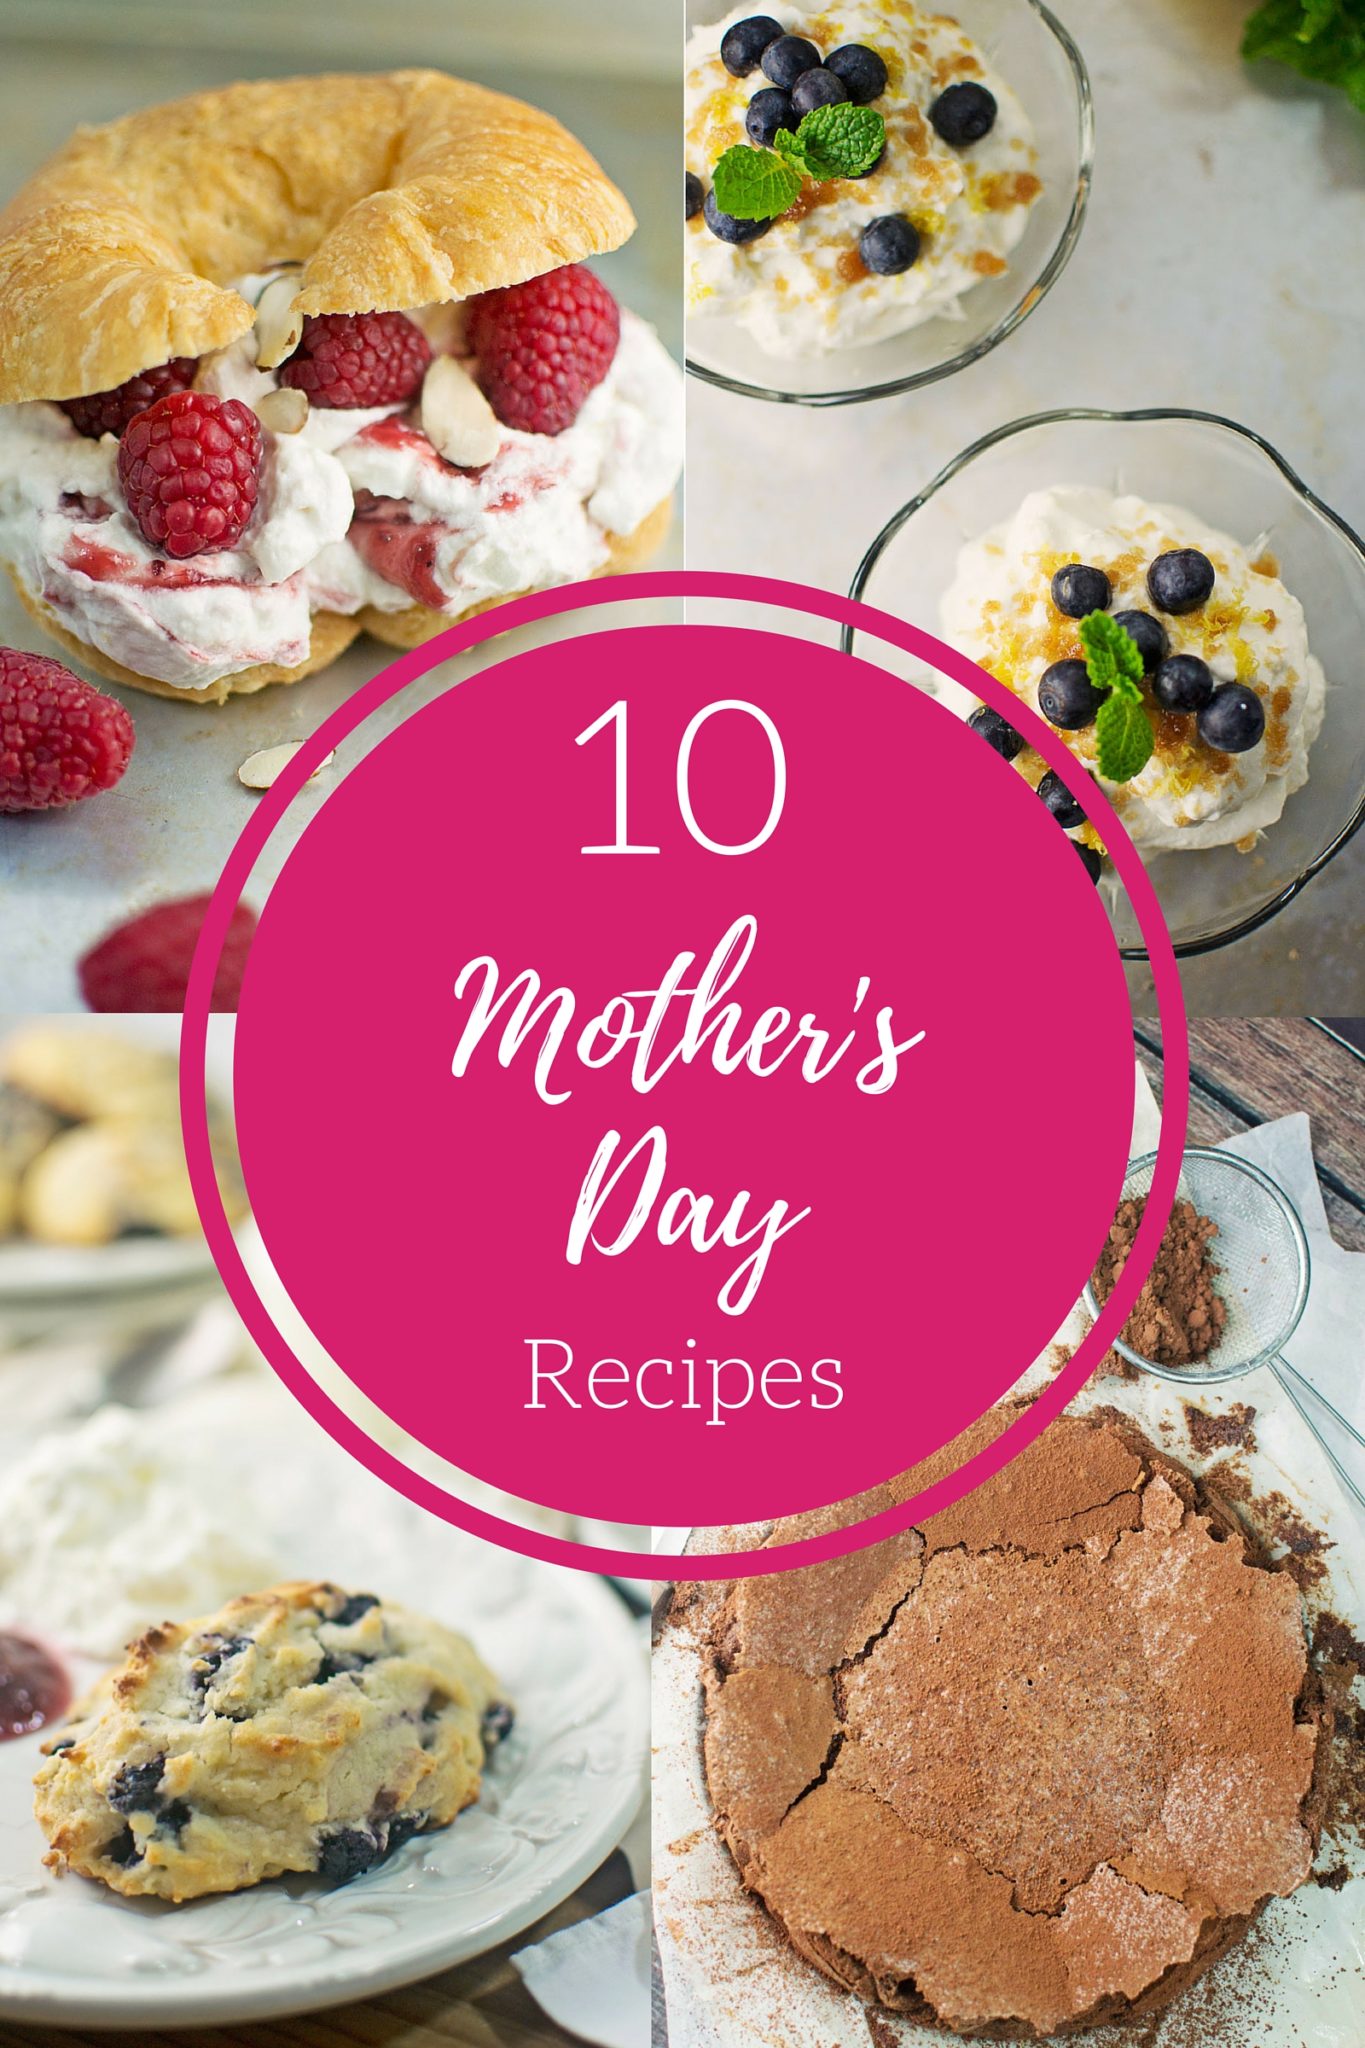 10 wonderfully sweet Mother's Day Recipes found @LittleFiggyFood